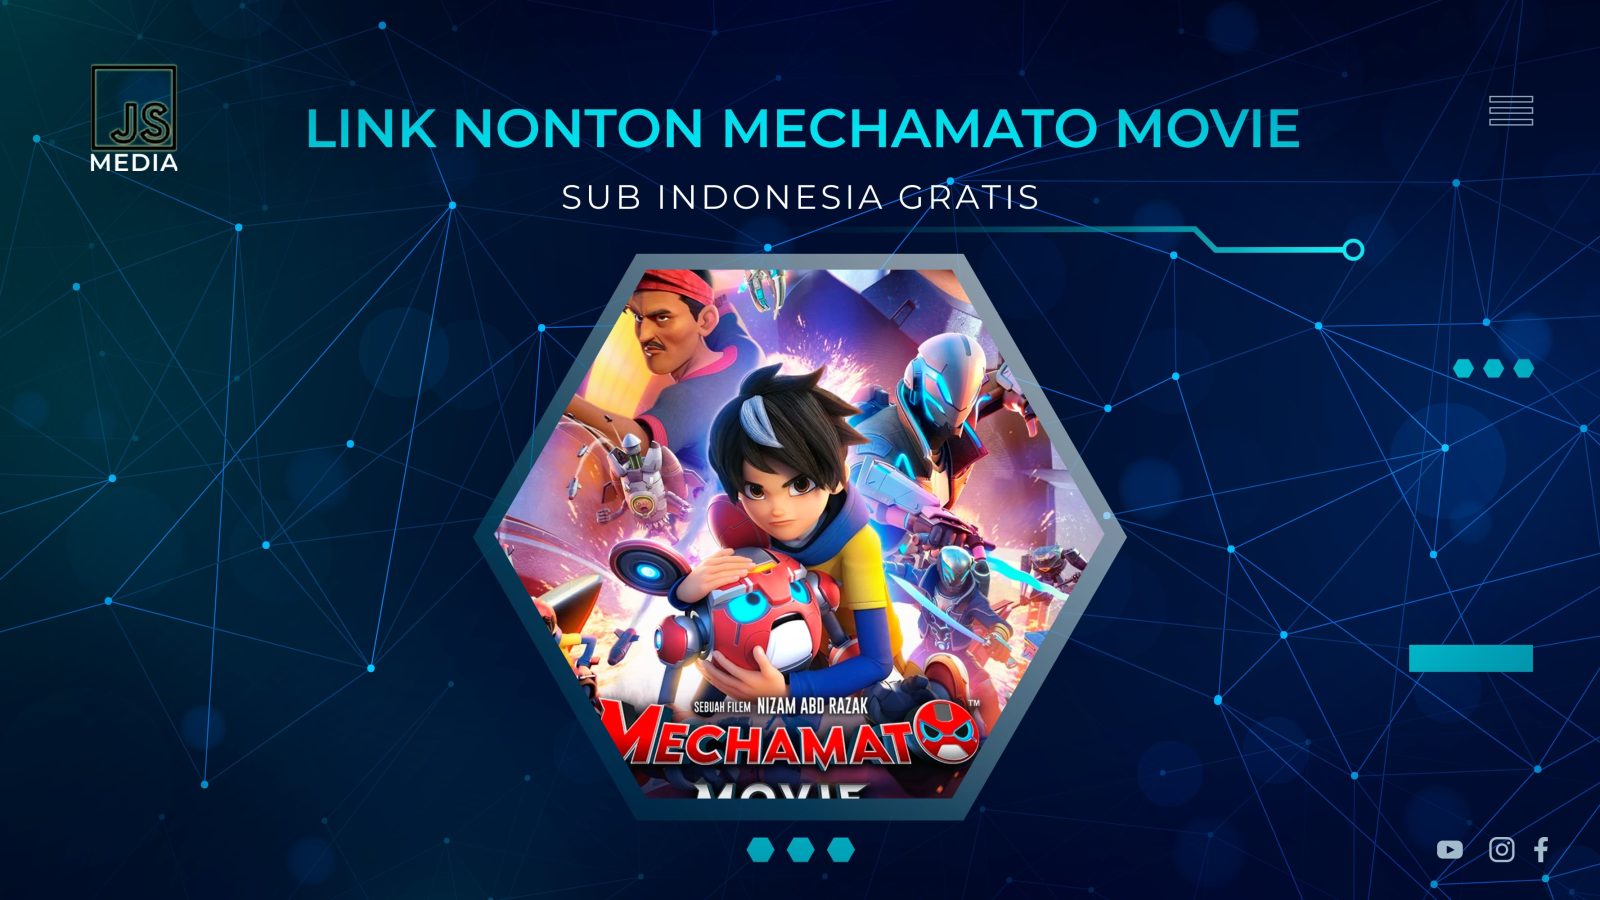 Link Nonton Mechamato Movie Sub Indonesia Gratis